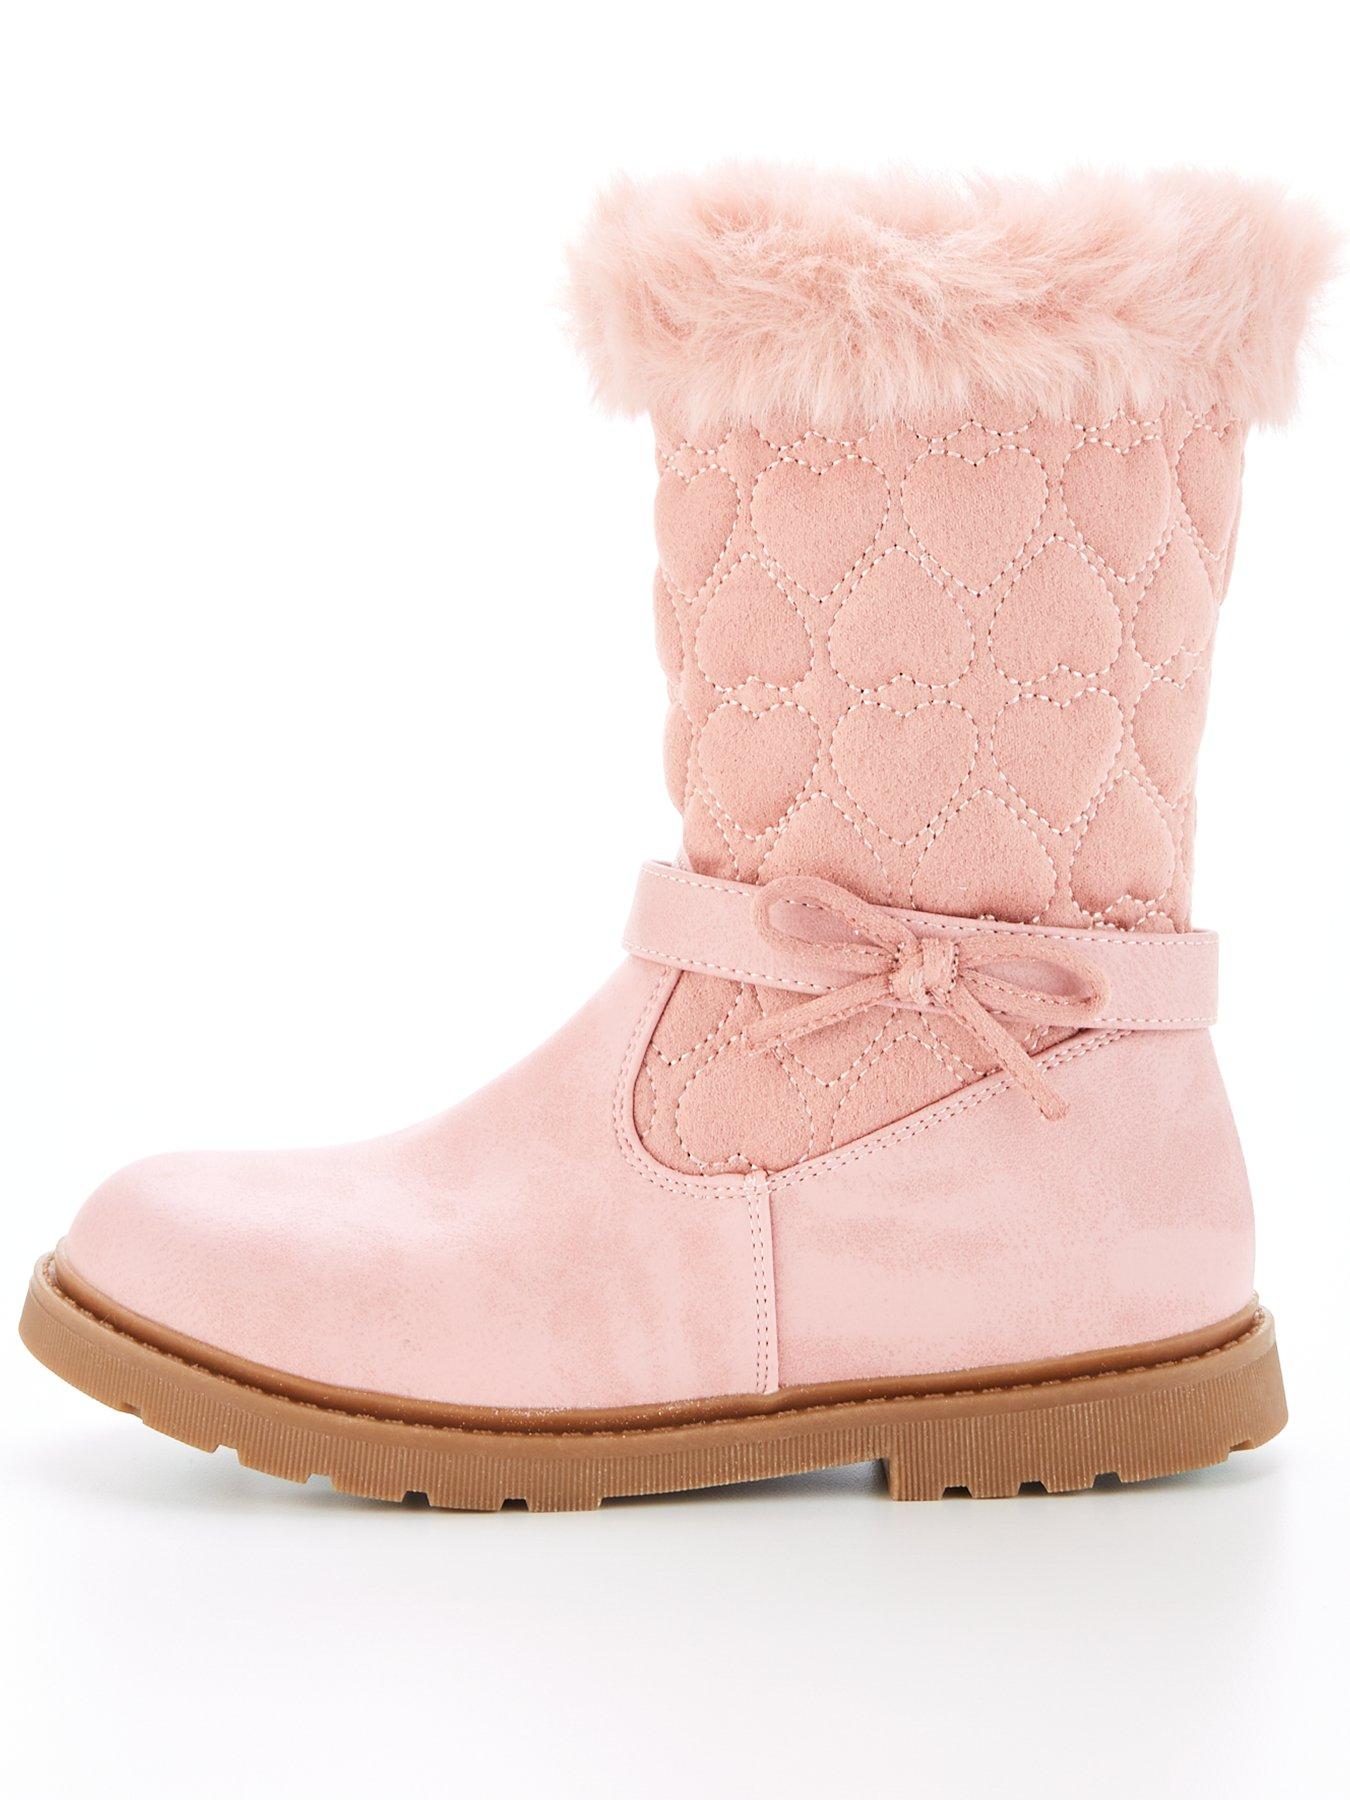 Kids Girls Pink Fur Trim Lace Up Childrens Studded Winter High Top Smart Boots 